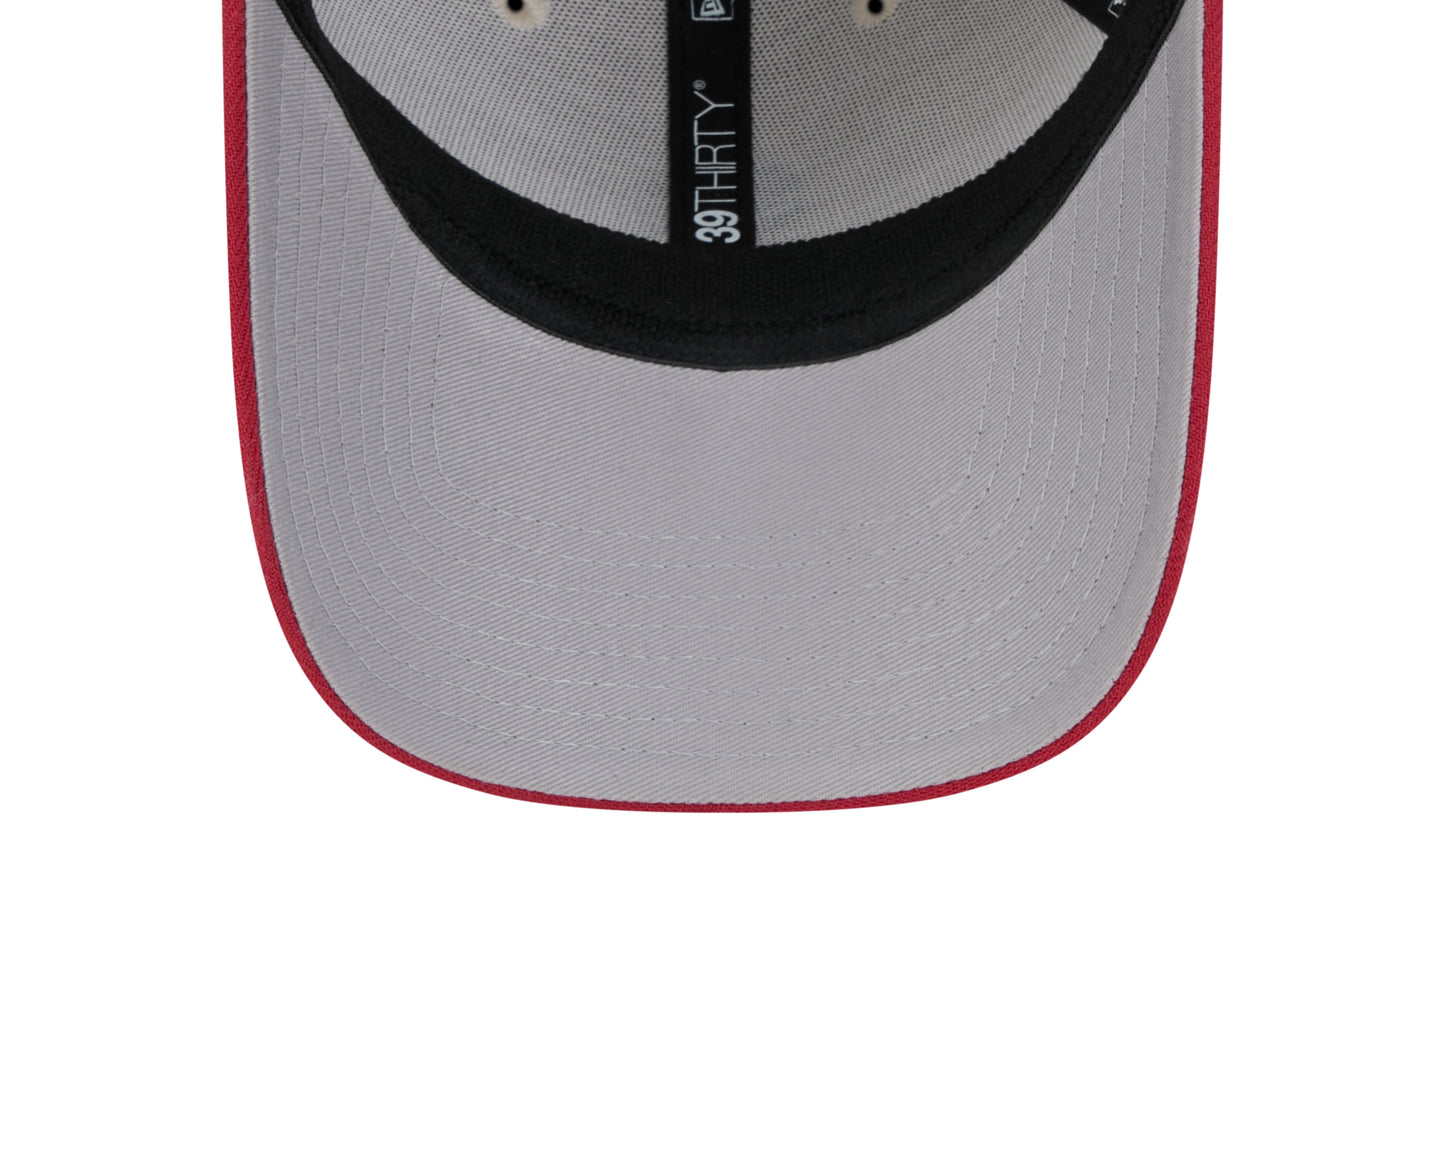 Chicago White Sox New Era Stone/Red 2024 4th of July 39THIRTY Flex Hat